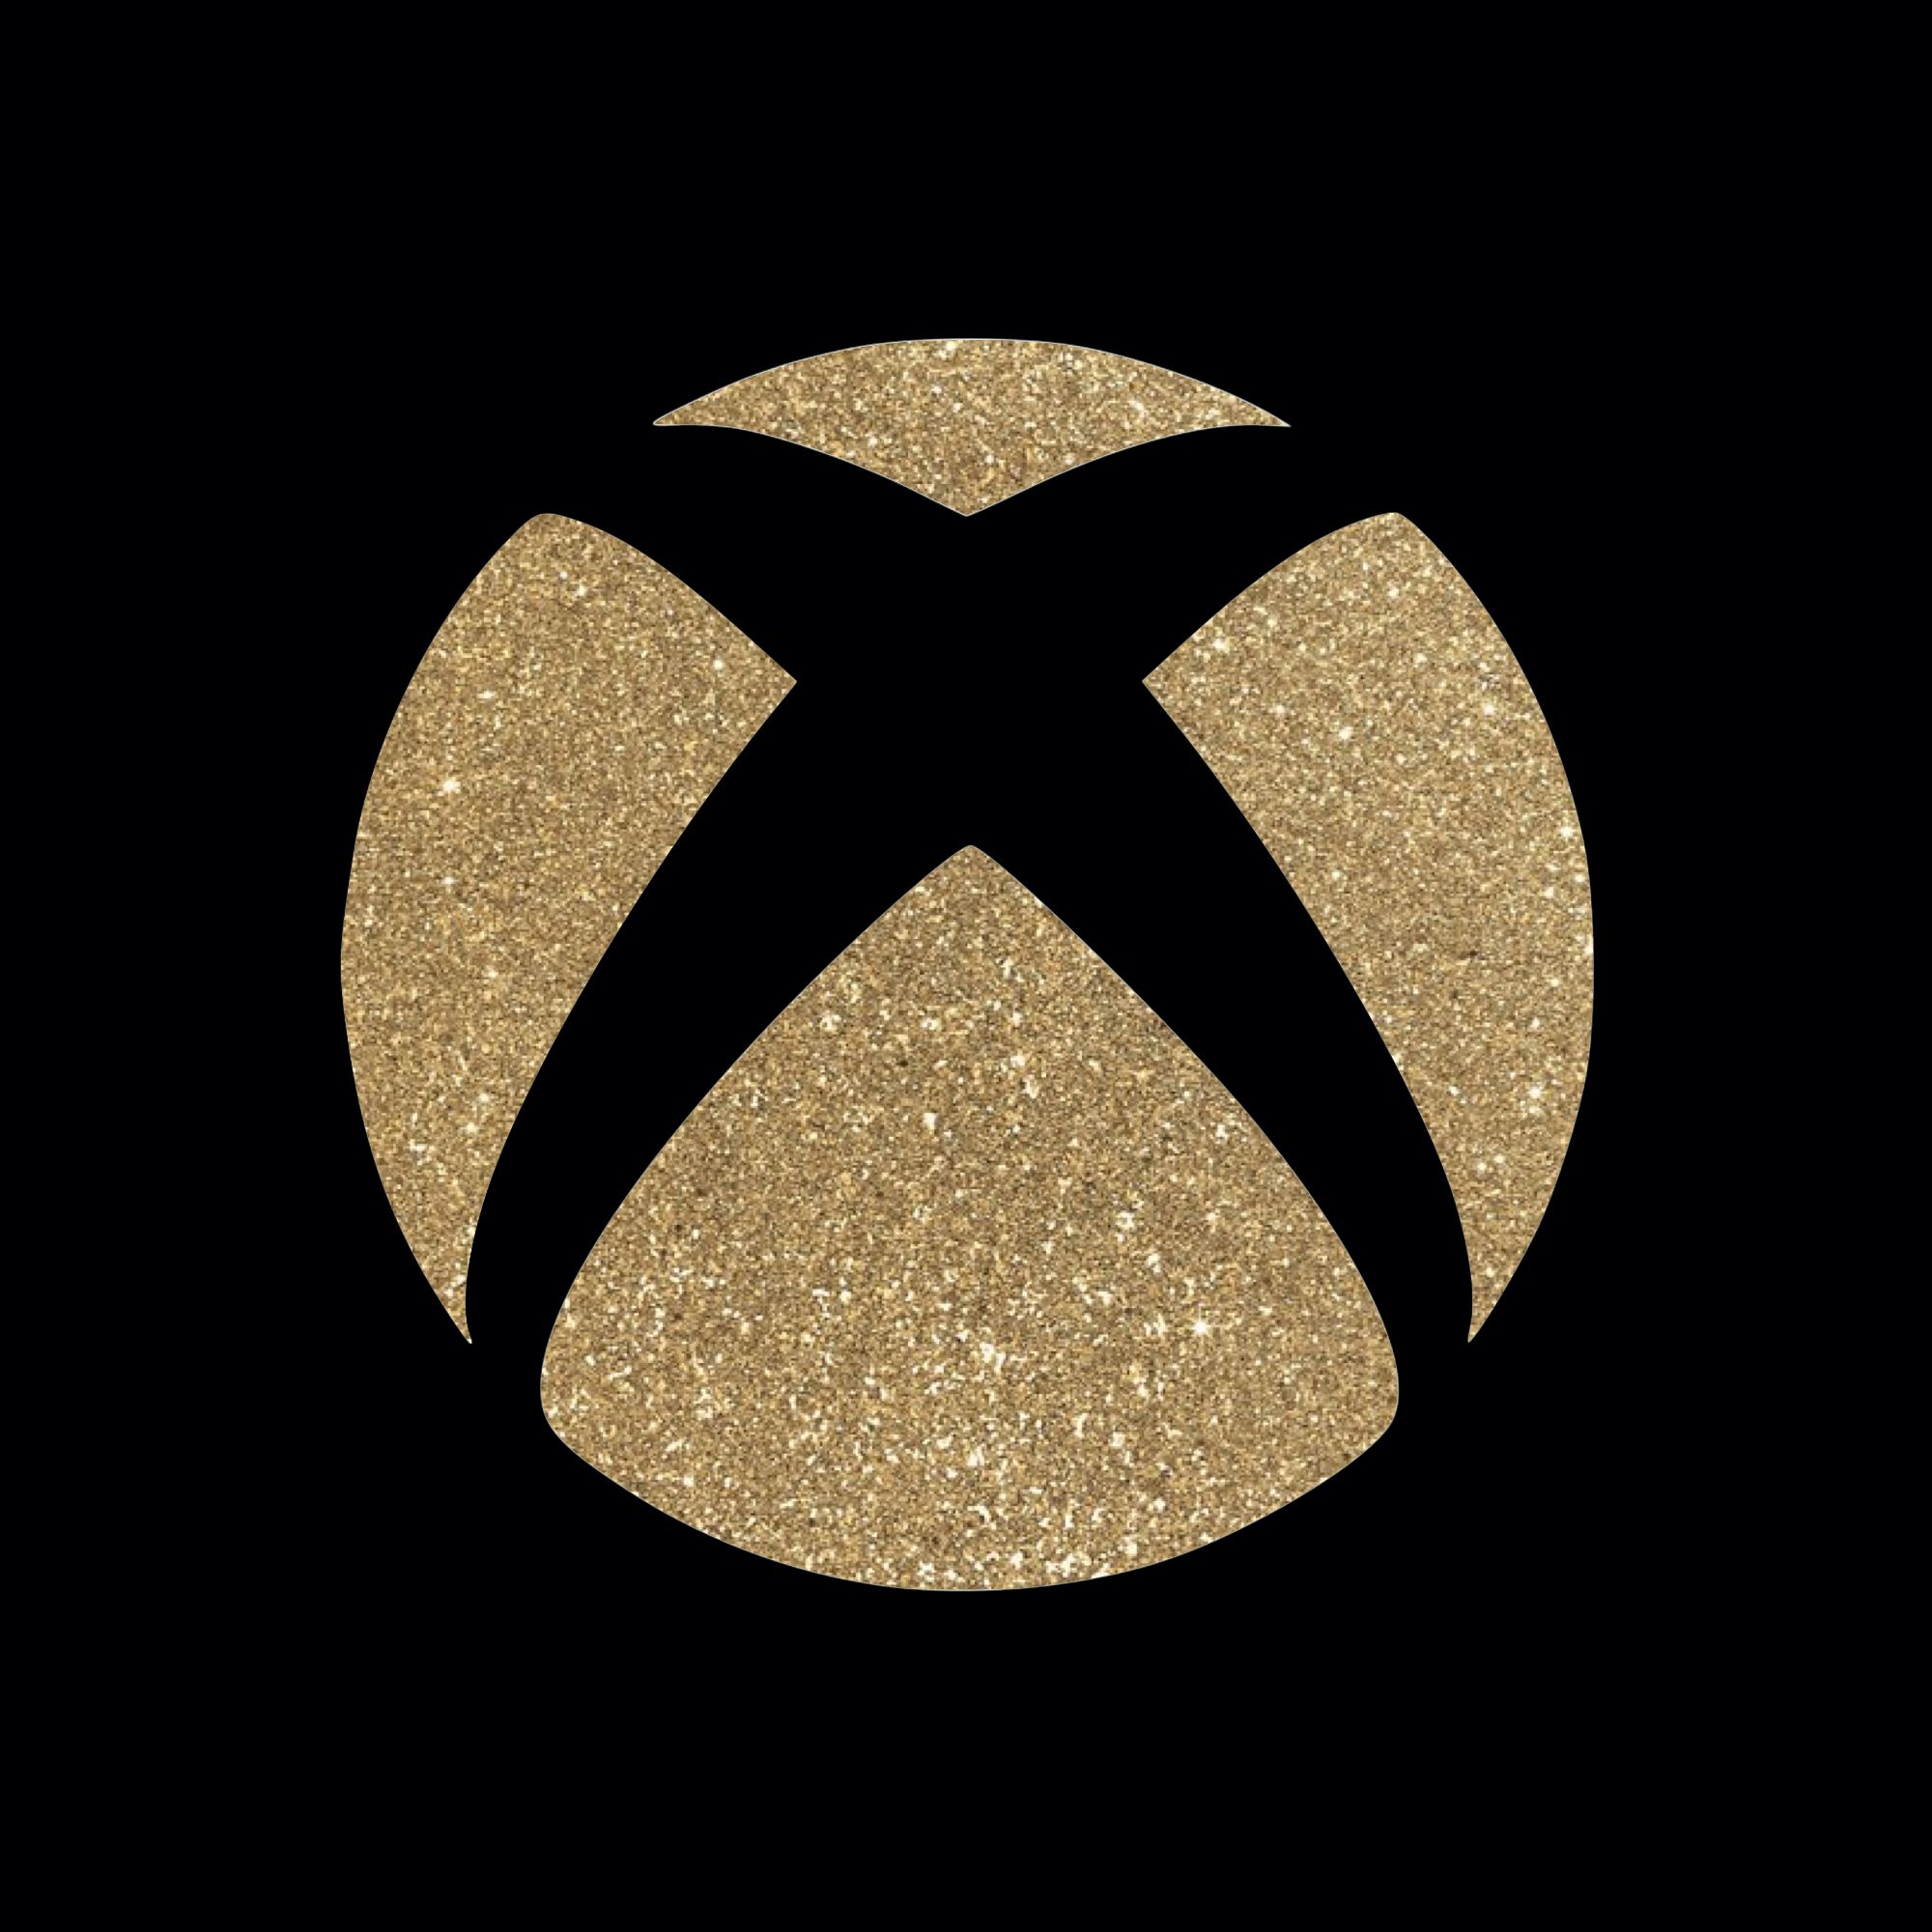 Black Xbox Icon Wallpapers